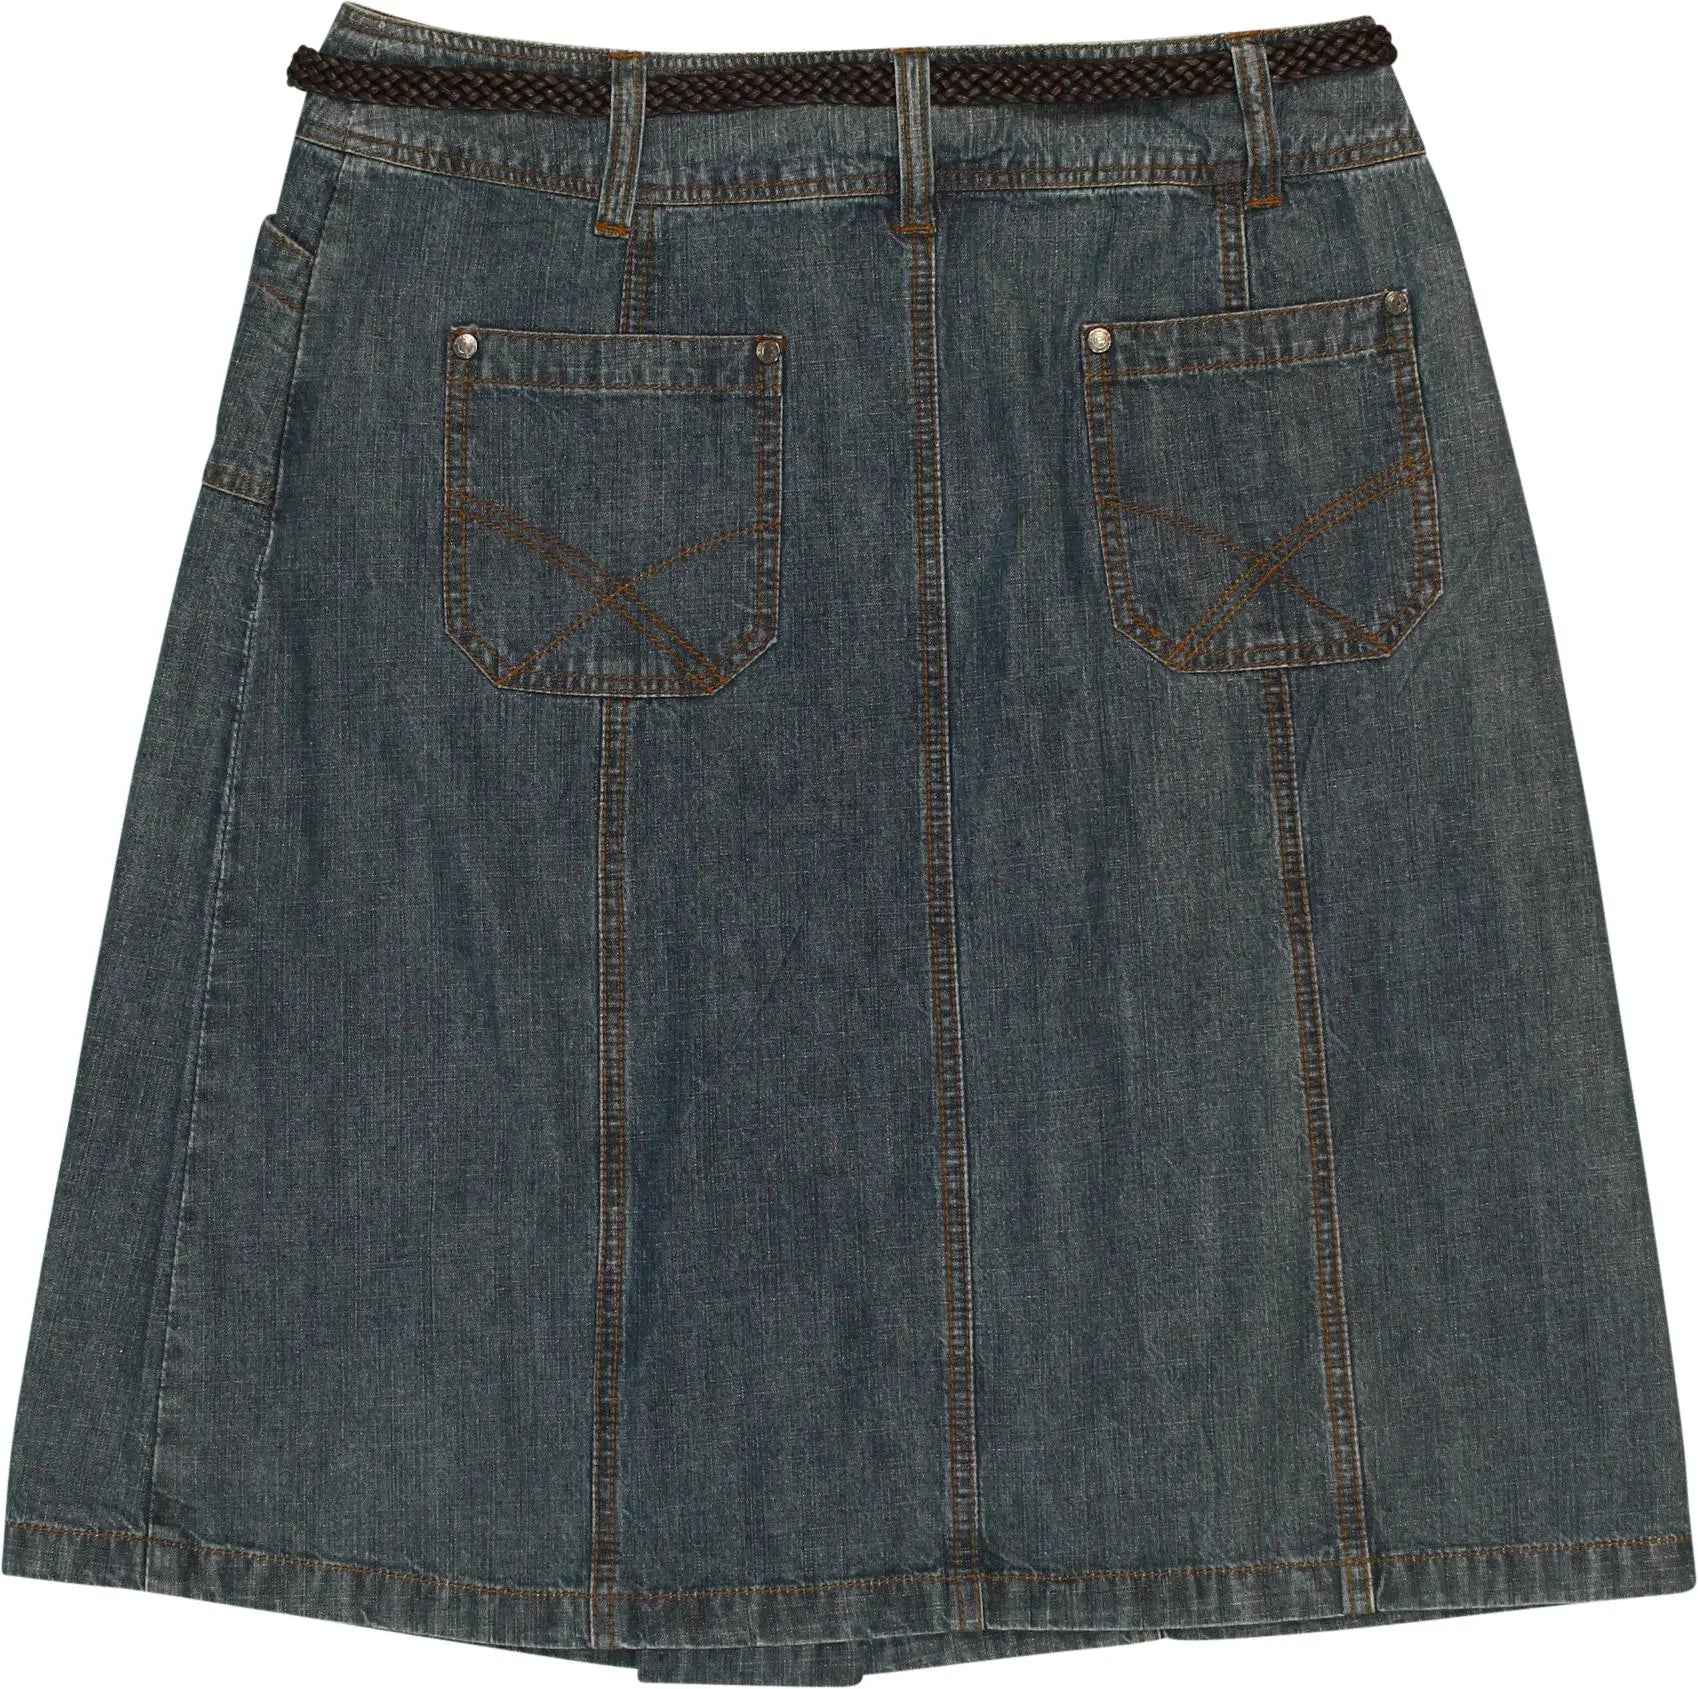 Essentials - Denim Skirt- ThriftTale.com - Vintage and second handclothing